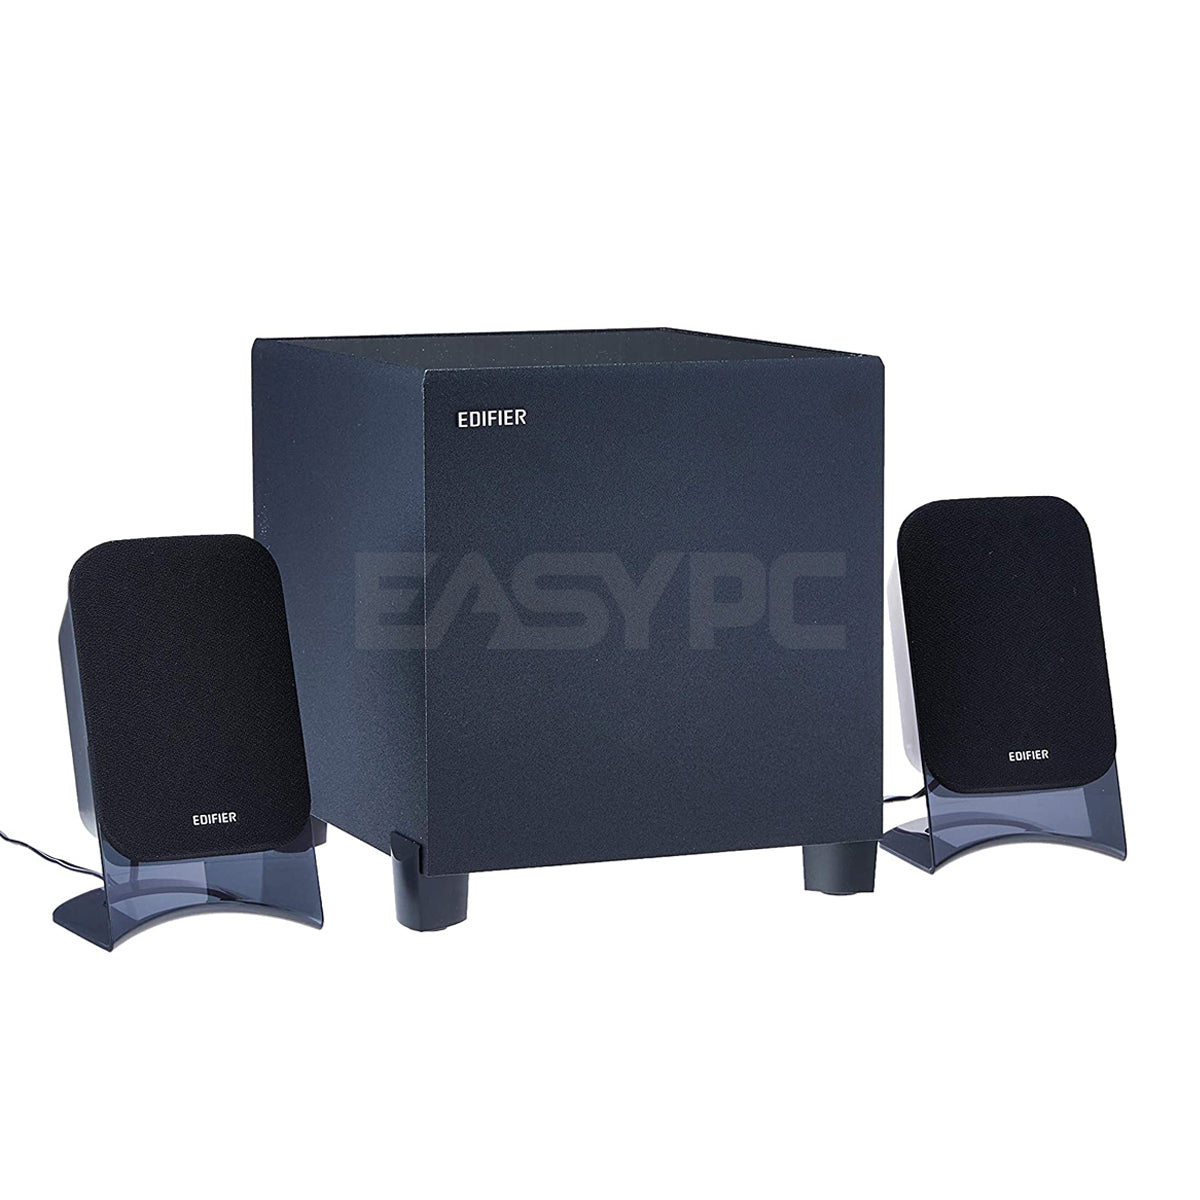 Edifier X100 2.1 with Subwoofer Speaker – EasyPC